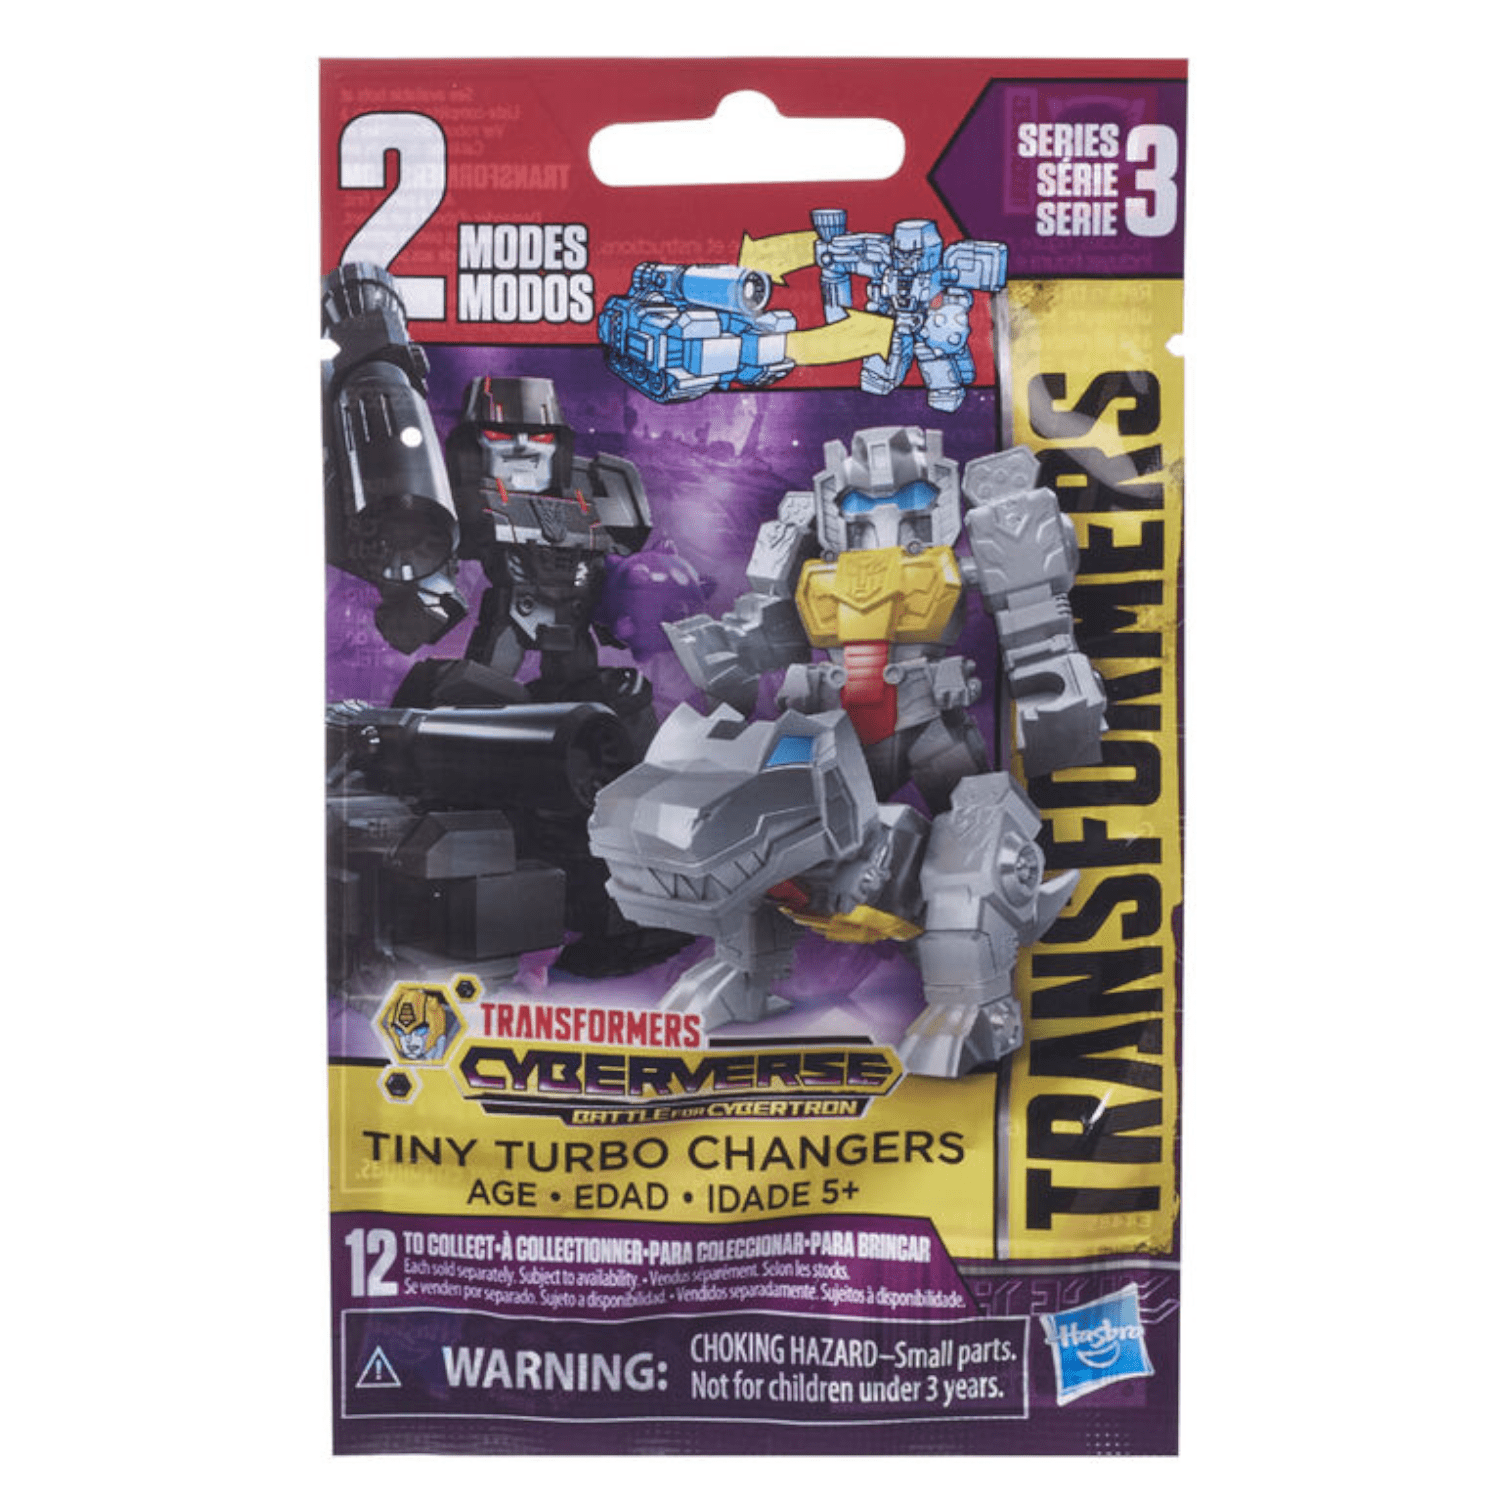 STARSCREAM Transformers Cyberverse Tiny Turbo Changers Series 1 2019 Hasbro New 